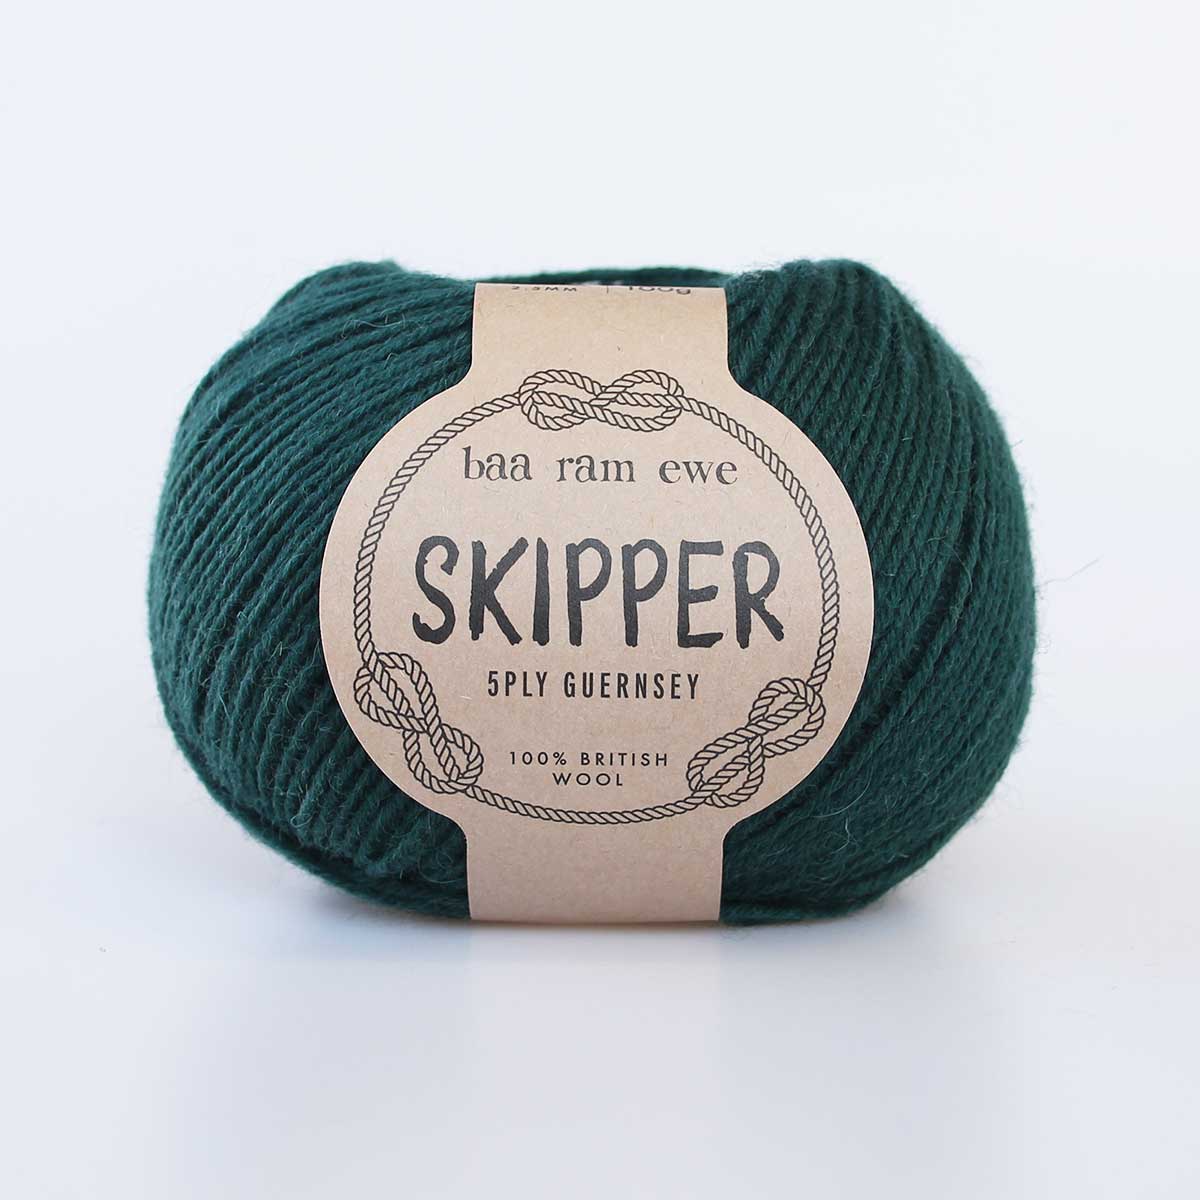 Skipper 5ply Guernsey Pack Of 5: 100% British Hand Knitting Wool 100g Ball